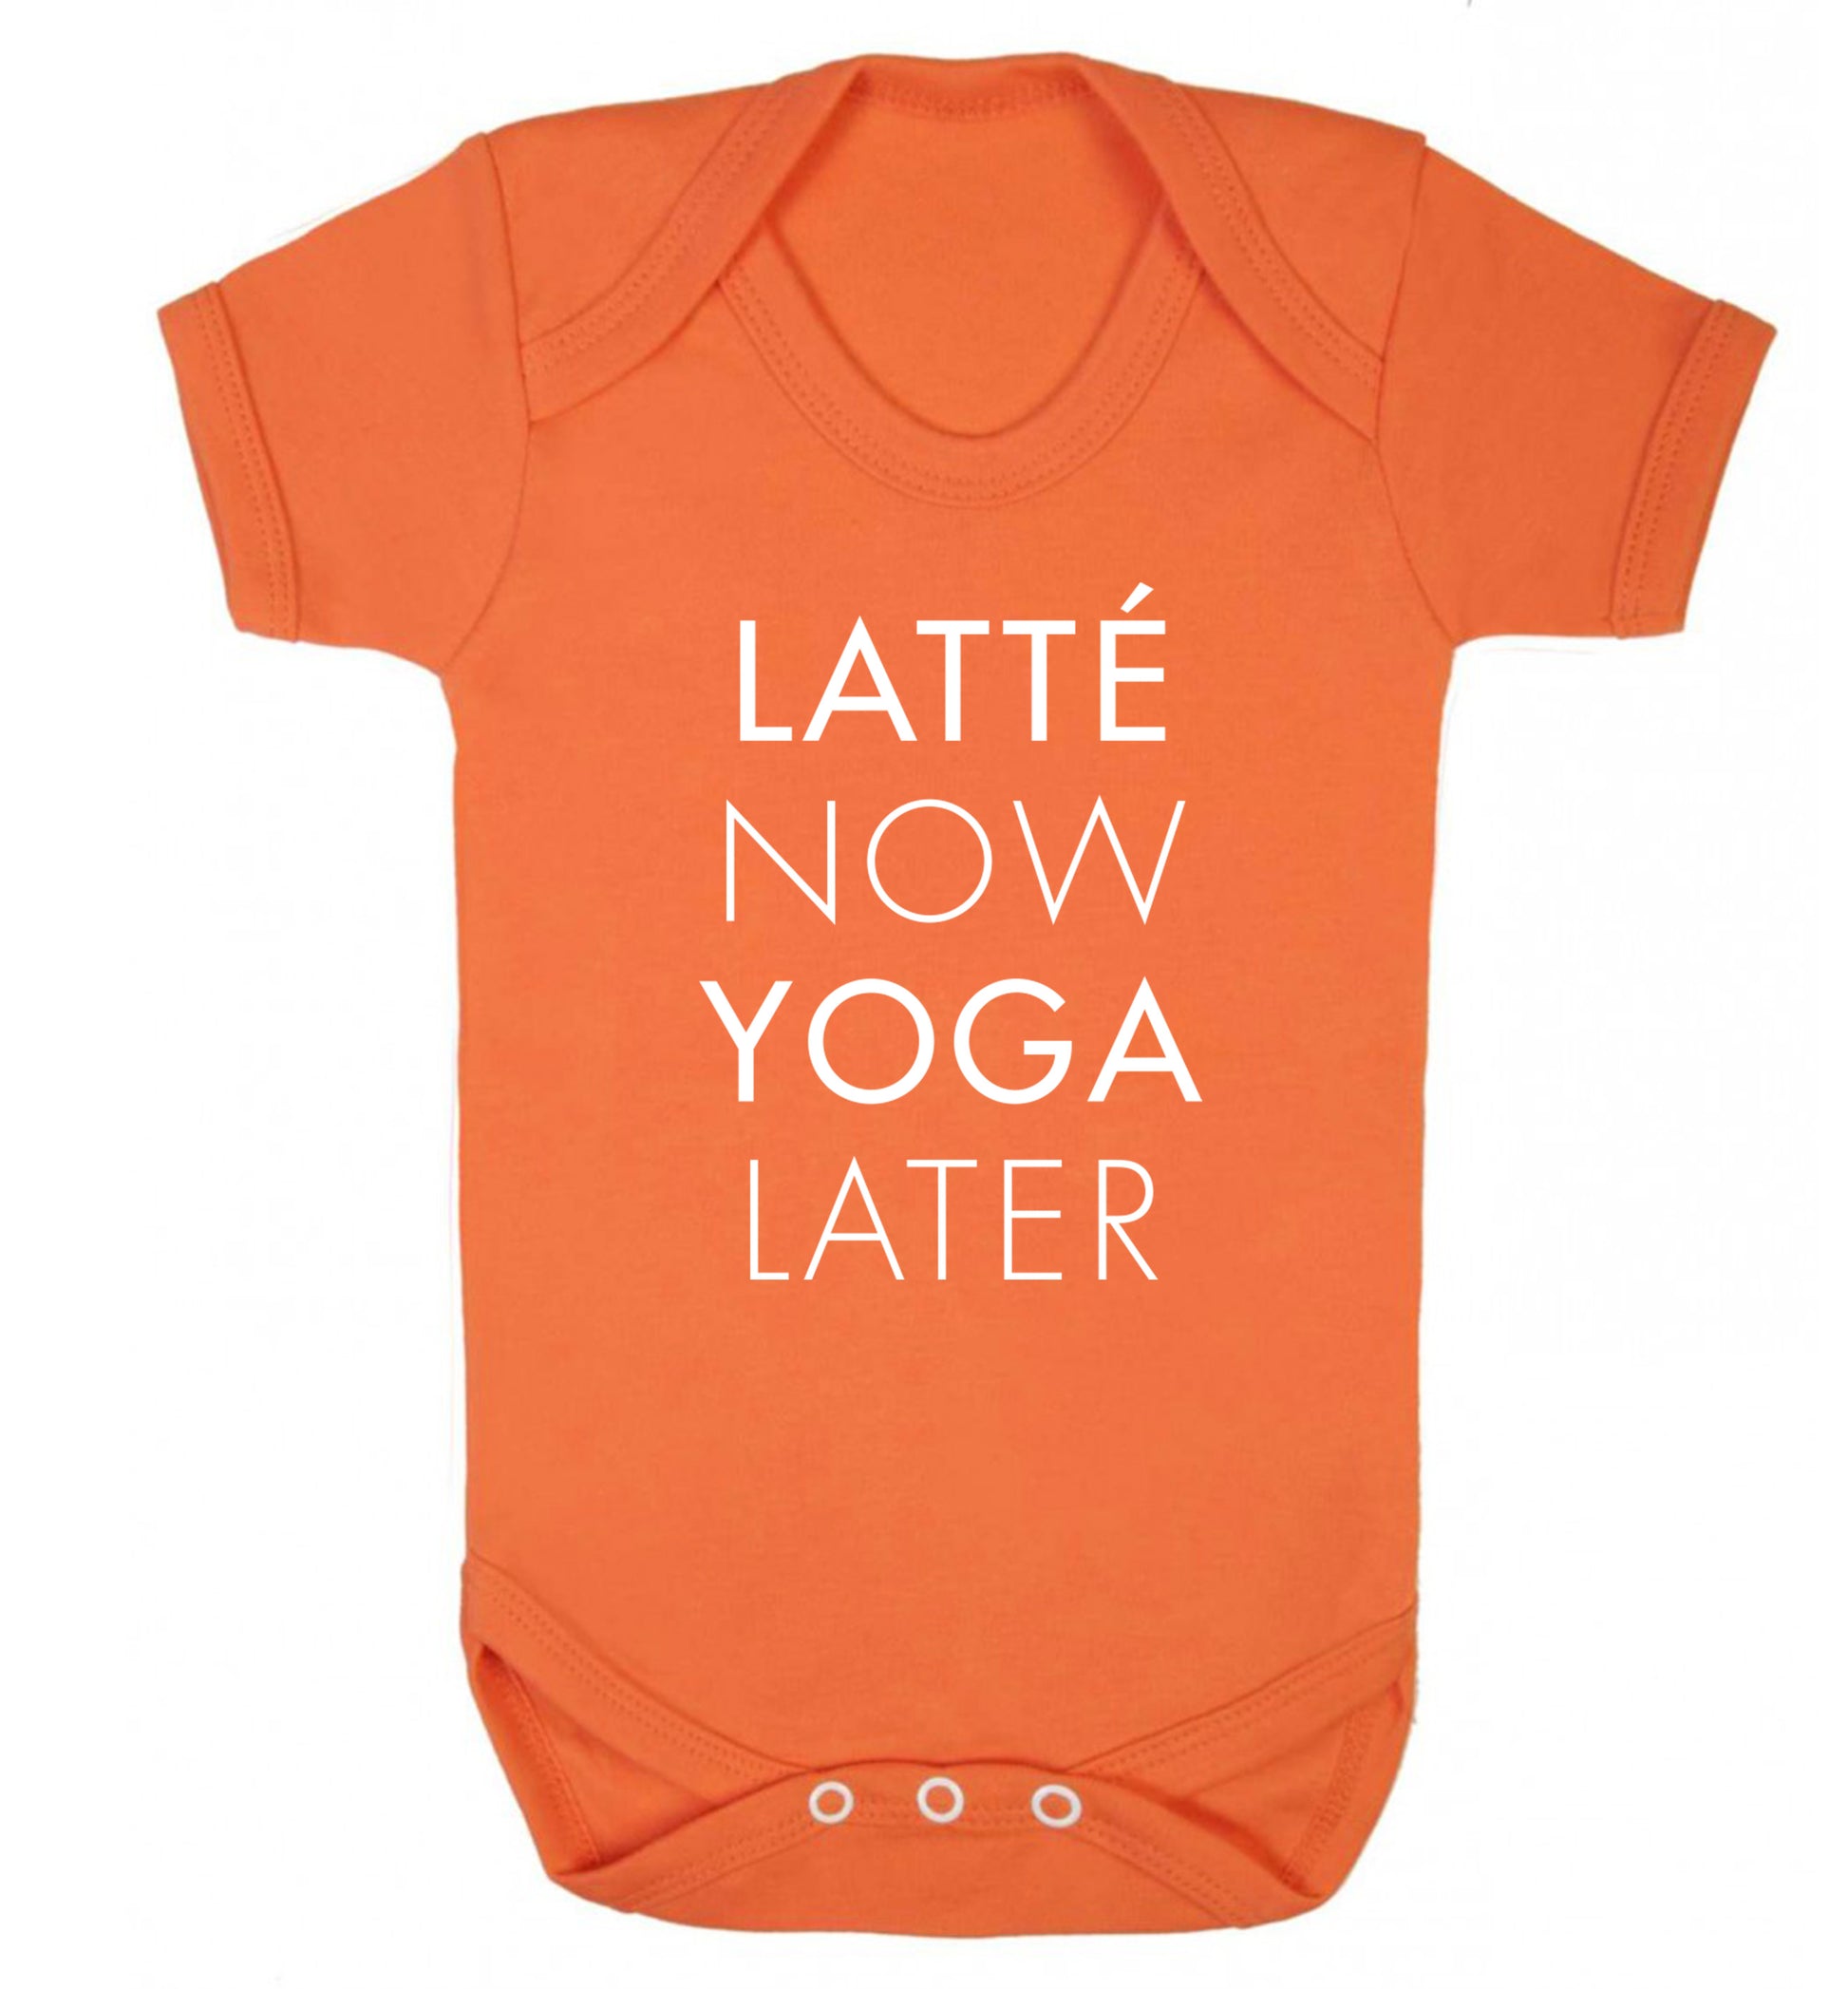 Latte now yoga later Baby Vest orange 18-24 months